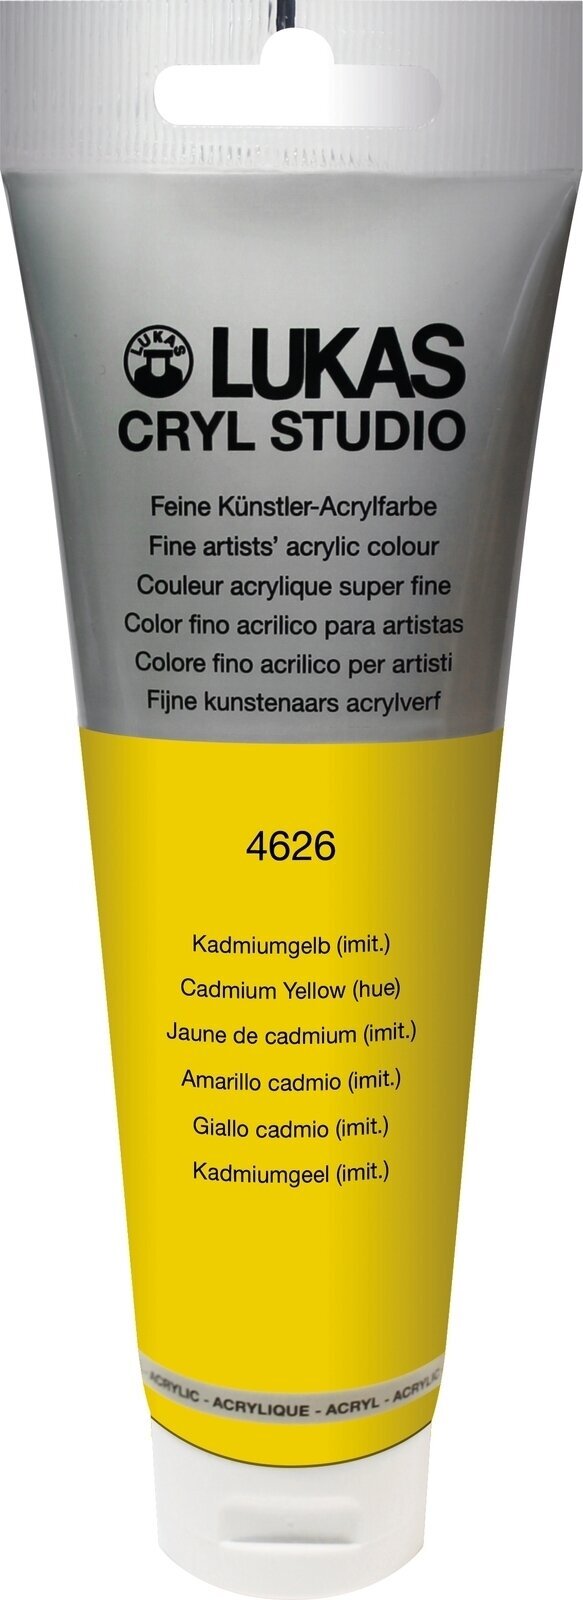 Acrylic Paint Lukas Cryl Studio Acrylic Paint Plastic Tube Acrylic Paint Cadmium Yellow Hue 125 ml 1 pc